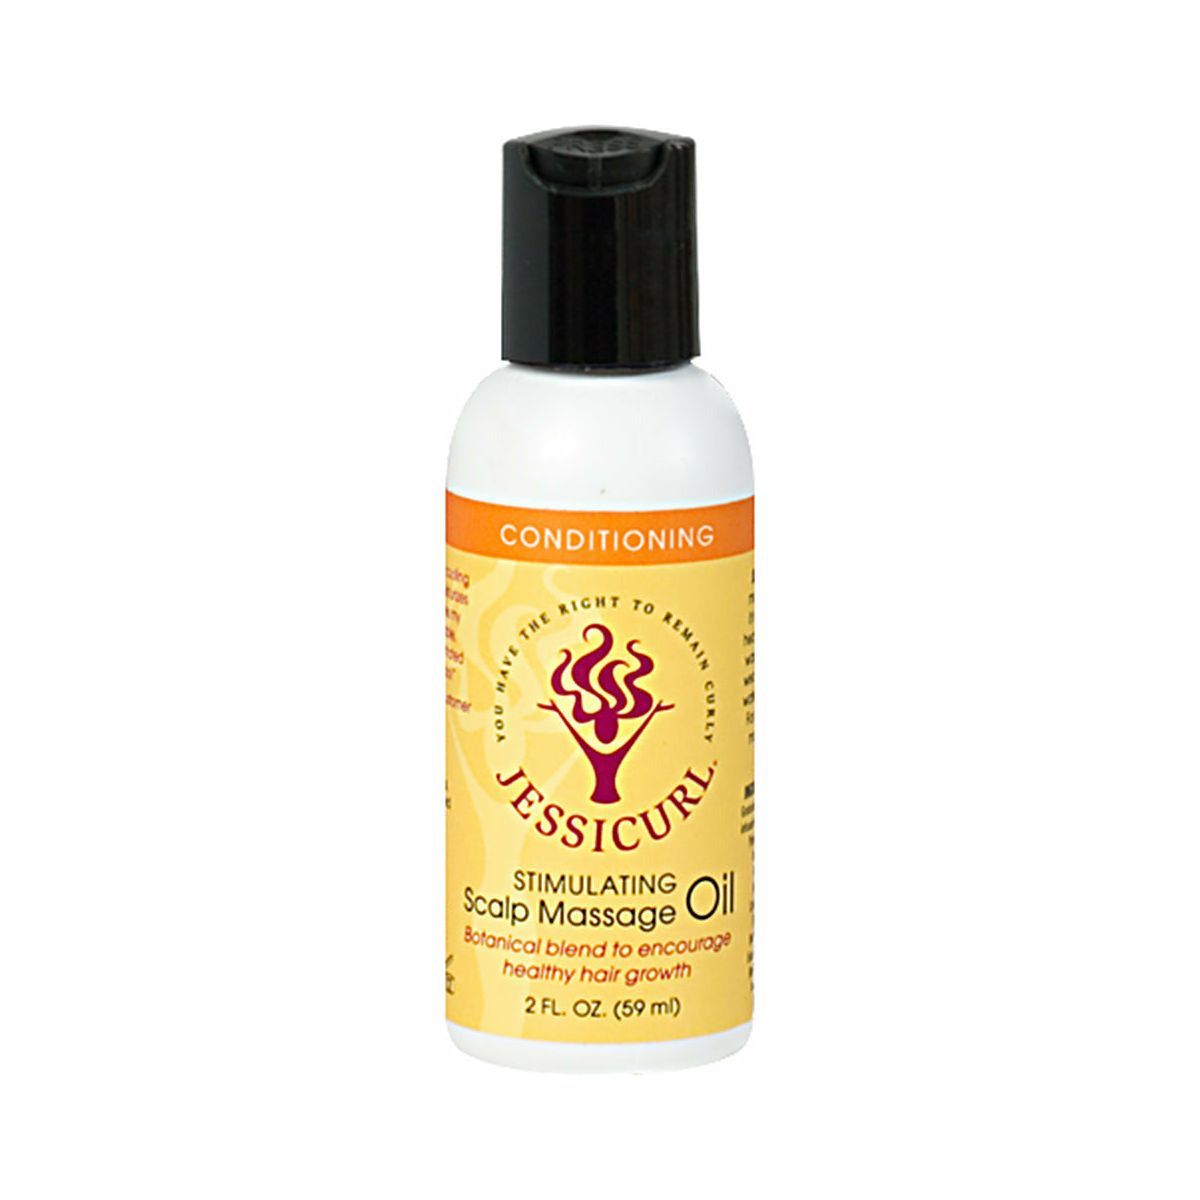 Jessicurl - Stimulating Scalp Massage Oil